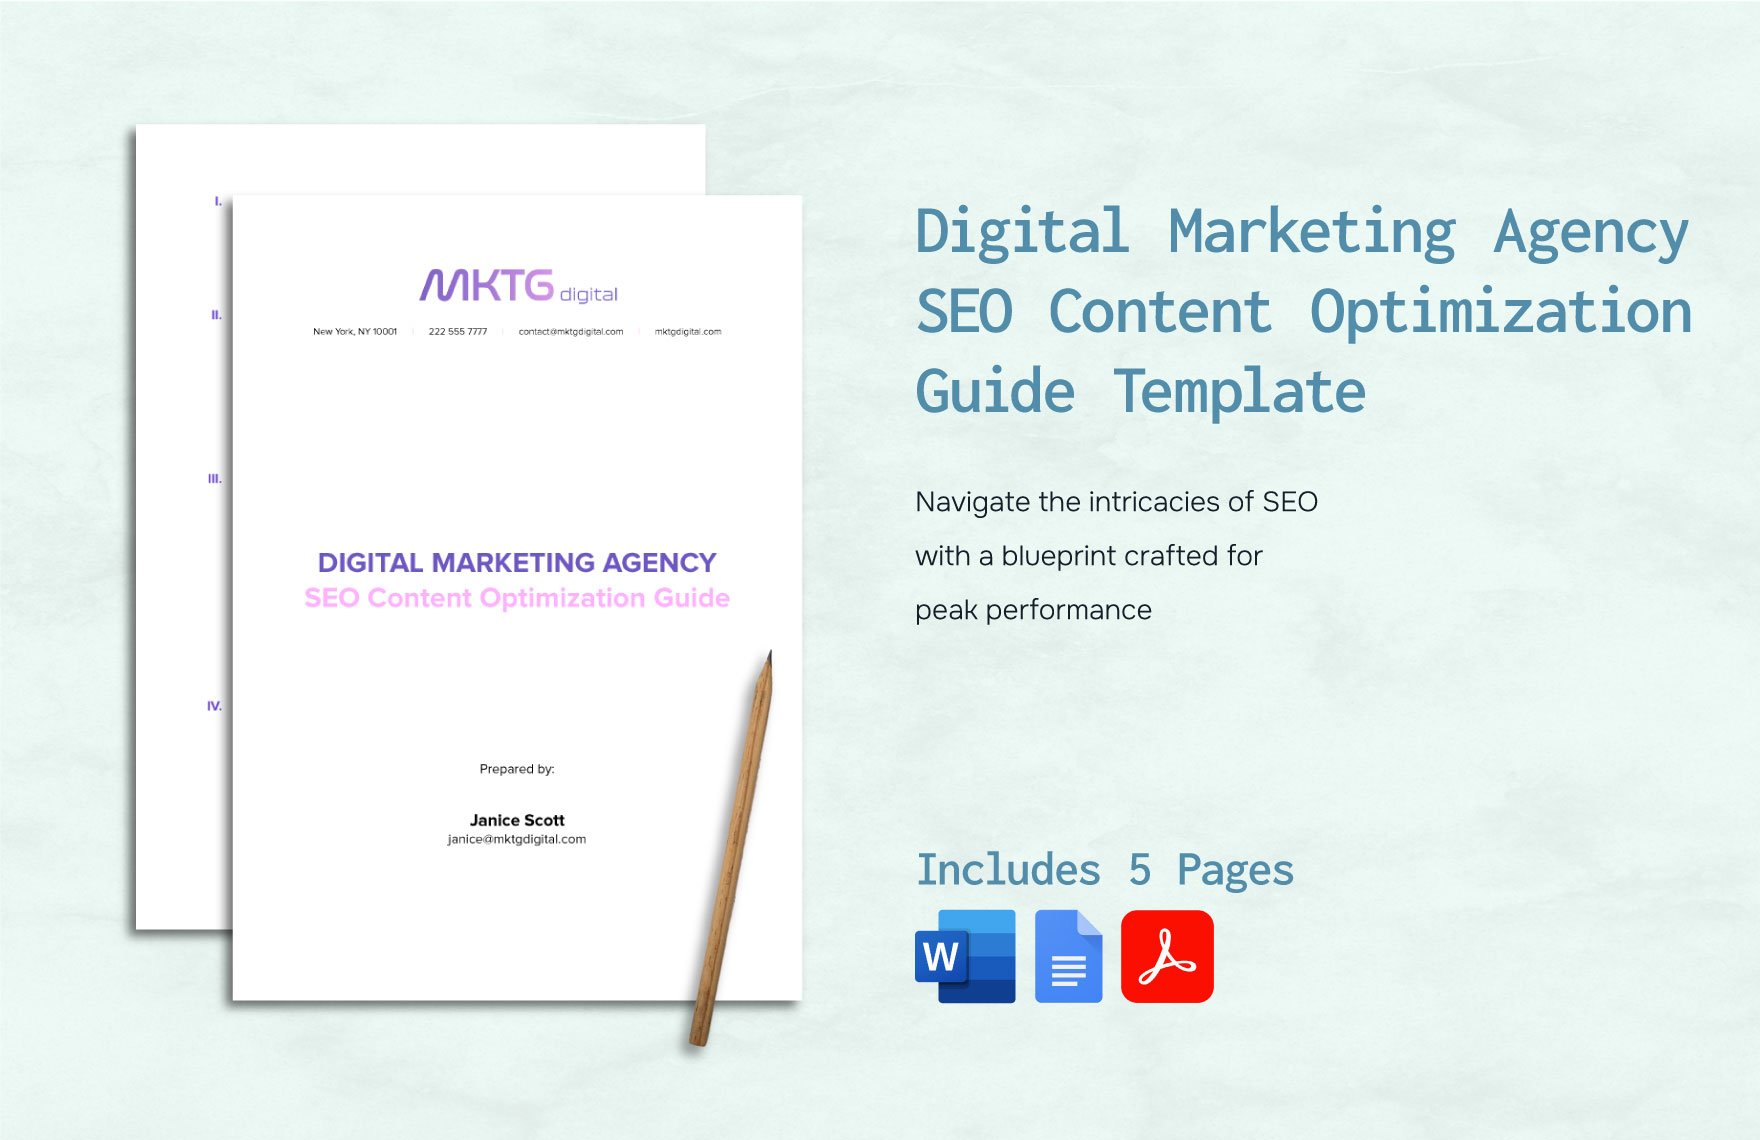 Digital Marketing Agency SEO Content Optimization Guide Template